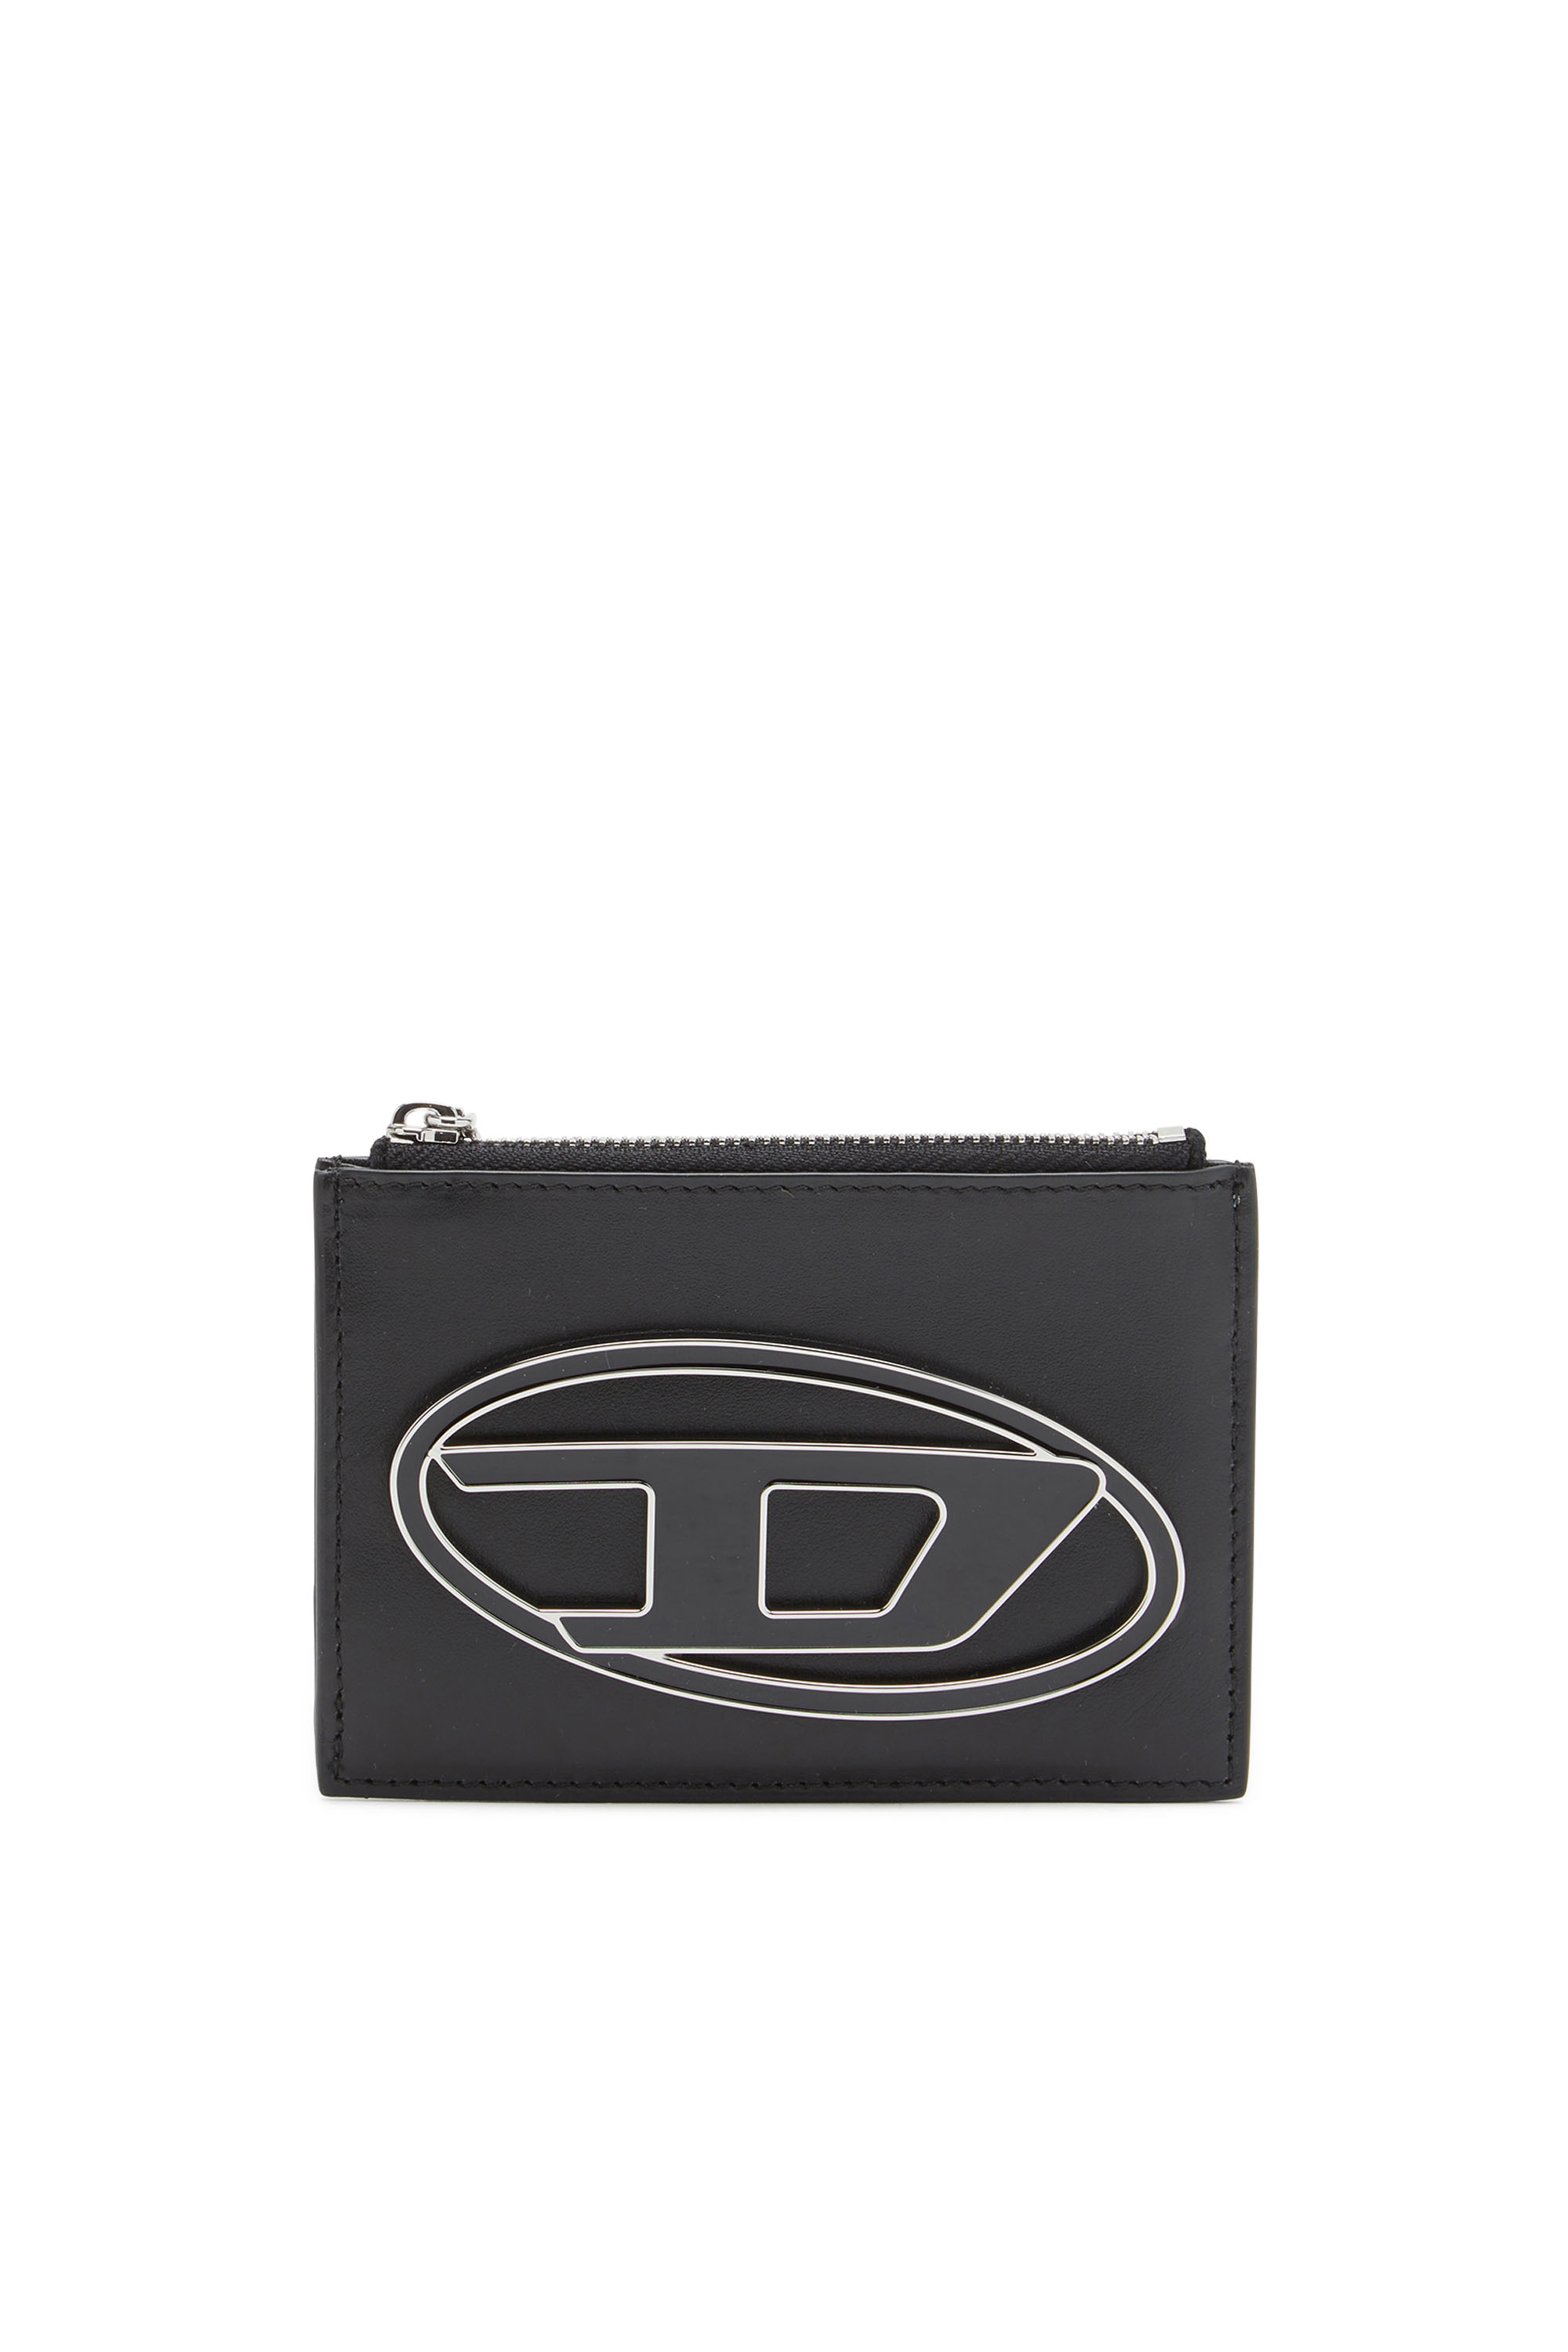 Diesel - 1DR CARD HOLDER I, Woman Card holder in leather in Black - Image 1